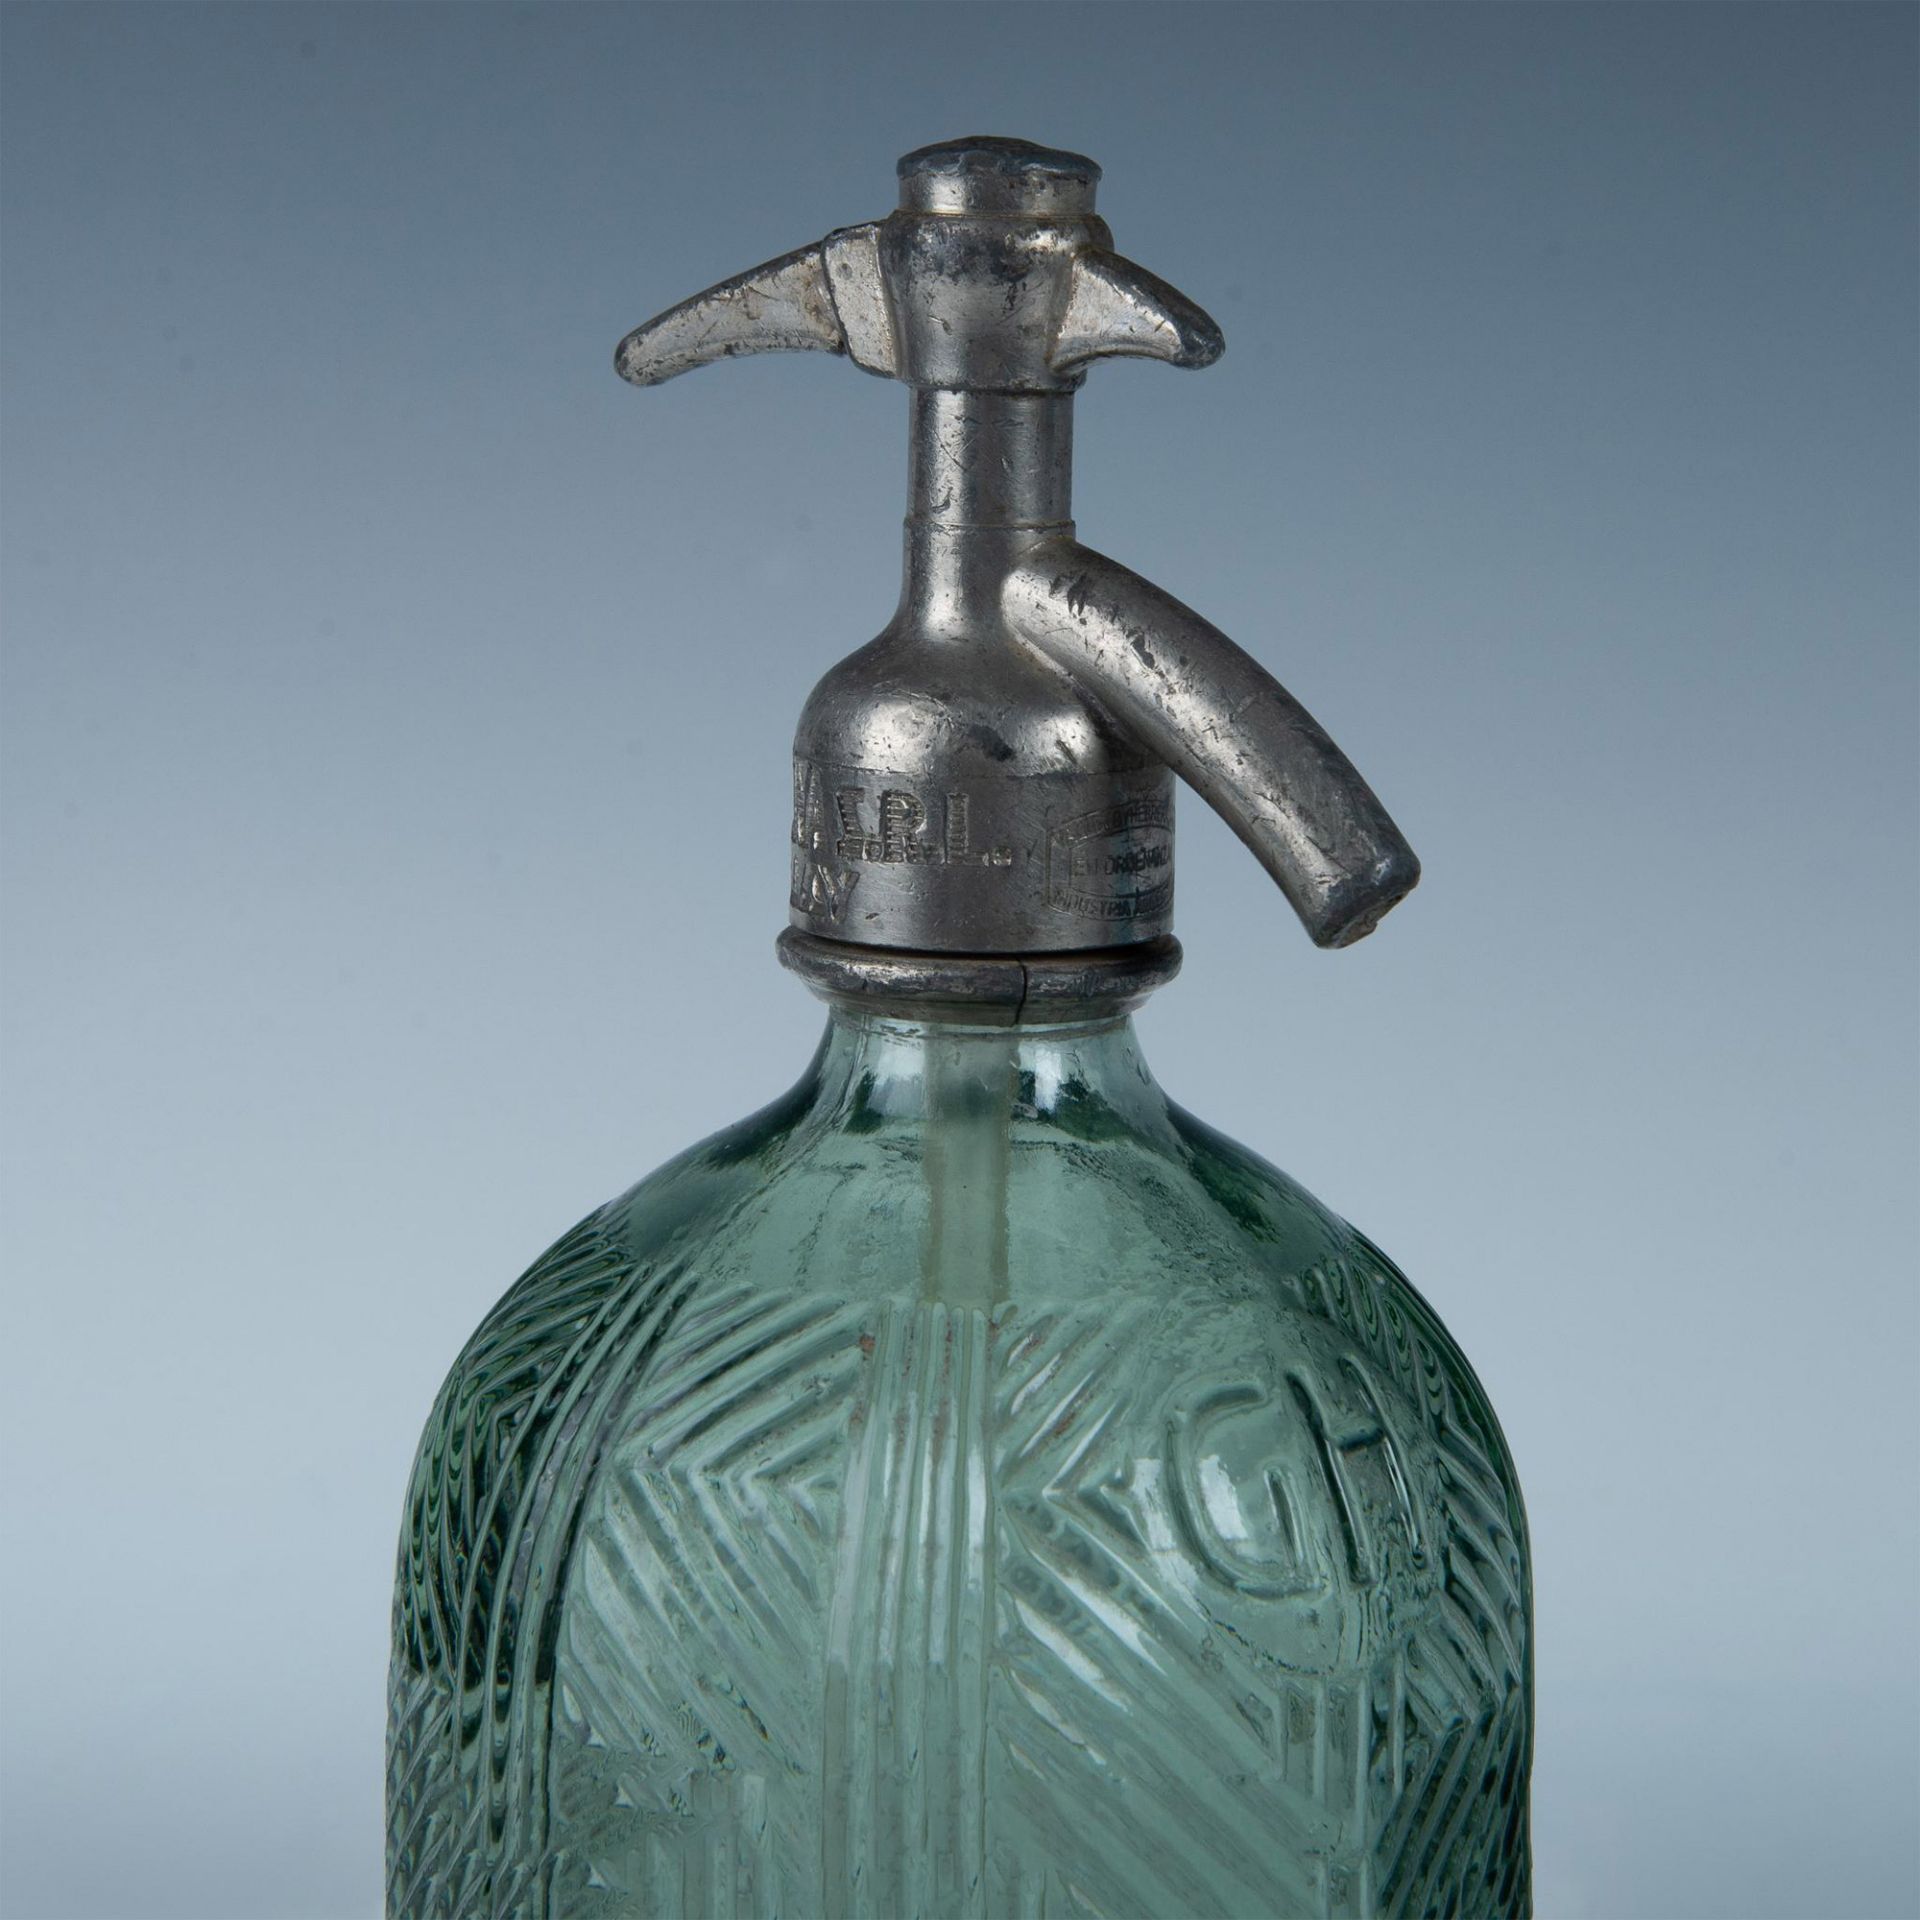 Antique Seltzer Bottle Gonzalez Hnos, Argentina - Image 4 of 7